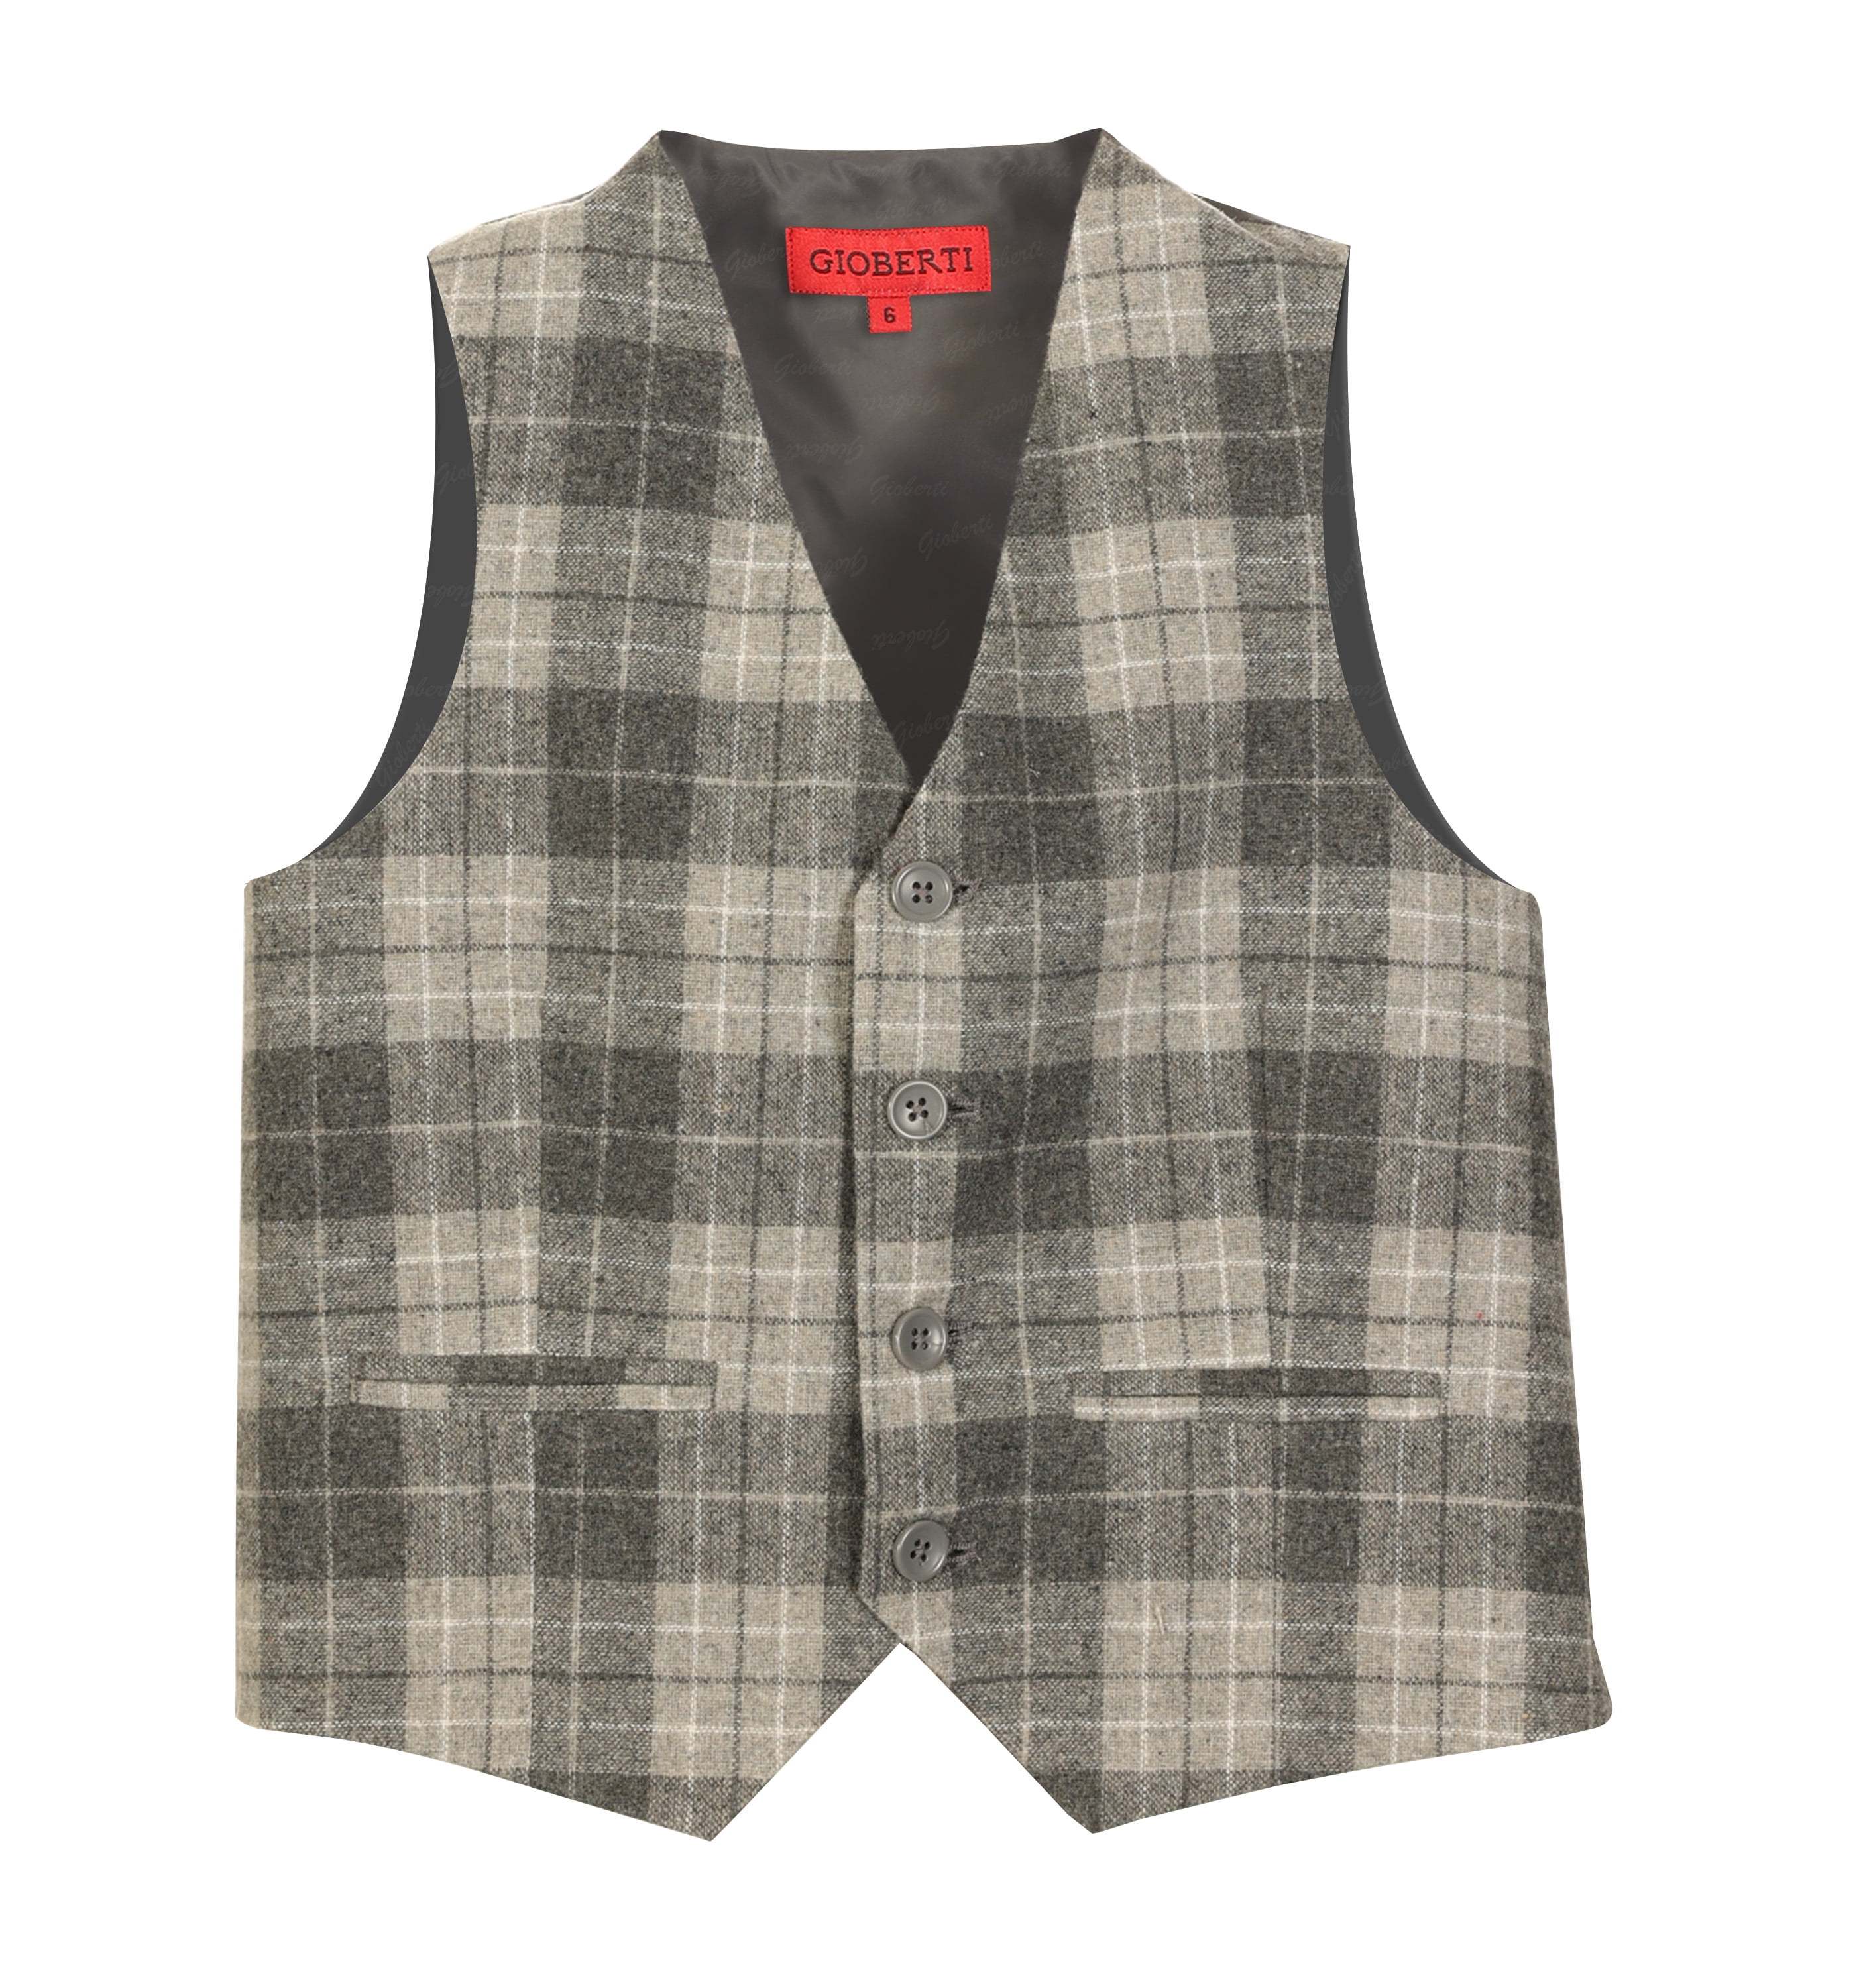 Gioberti Kids and Boys Tweed Plaid Formal Suit Vest - Walmart.com